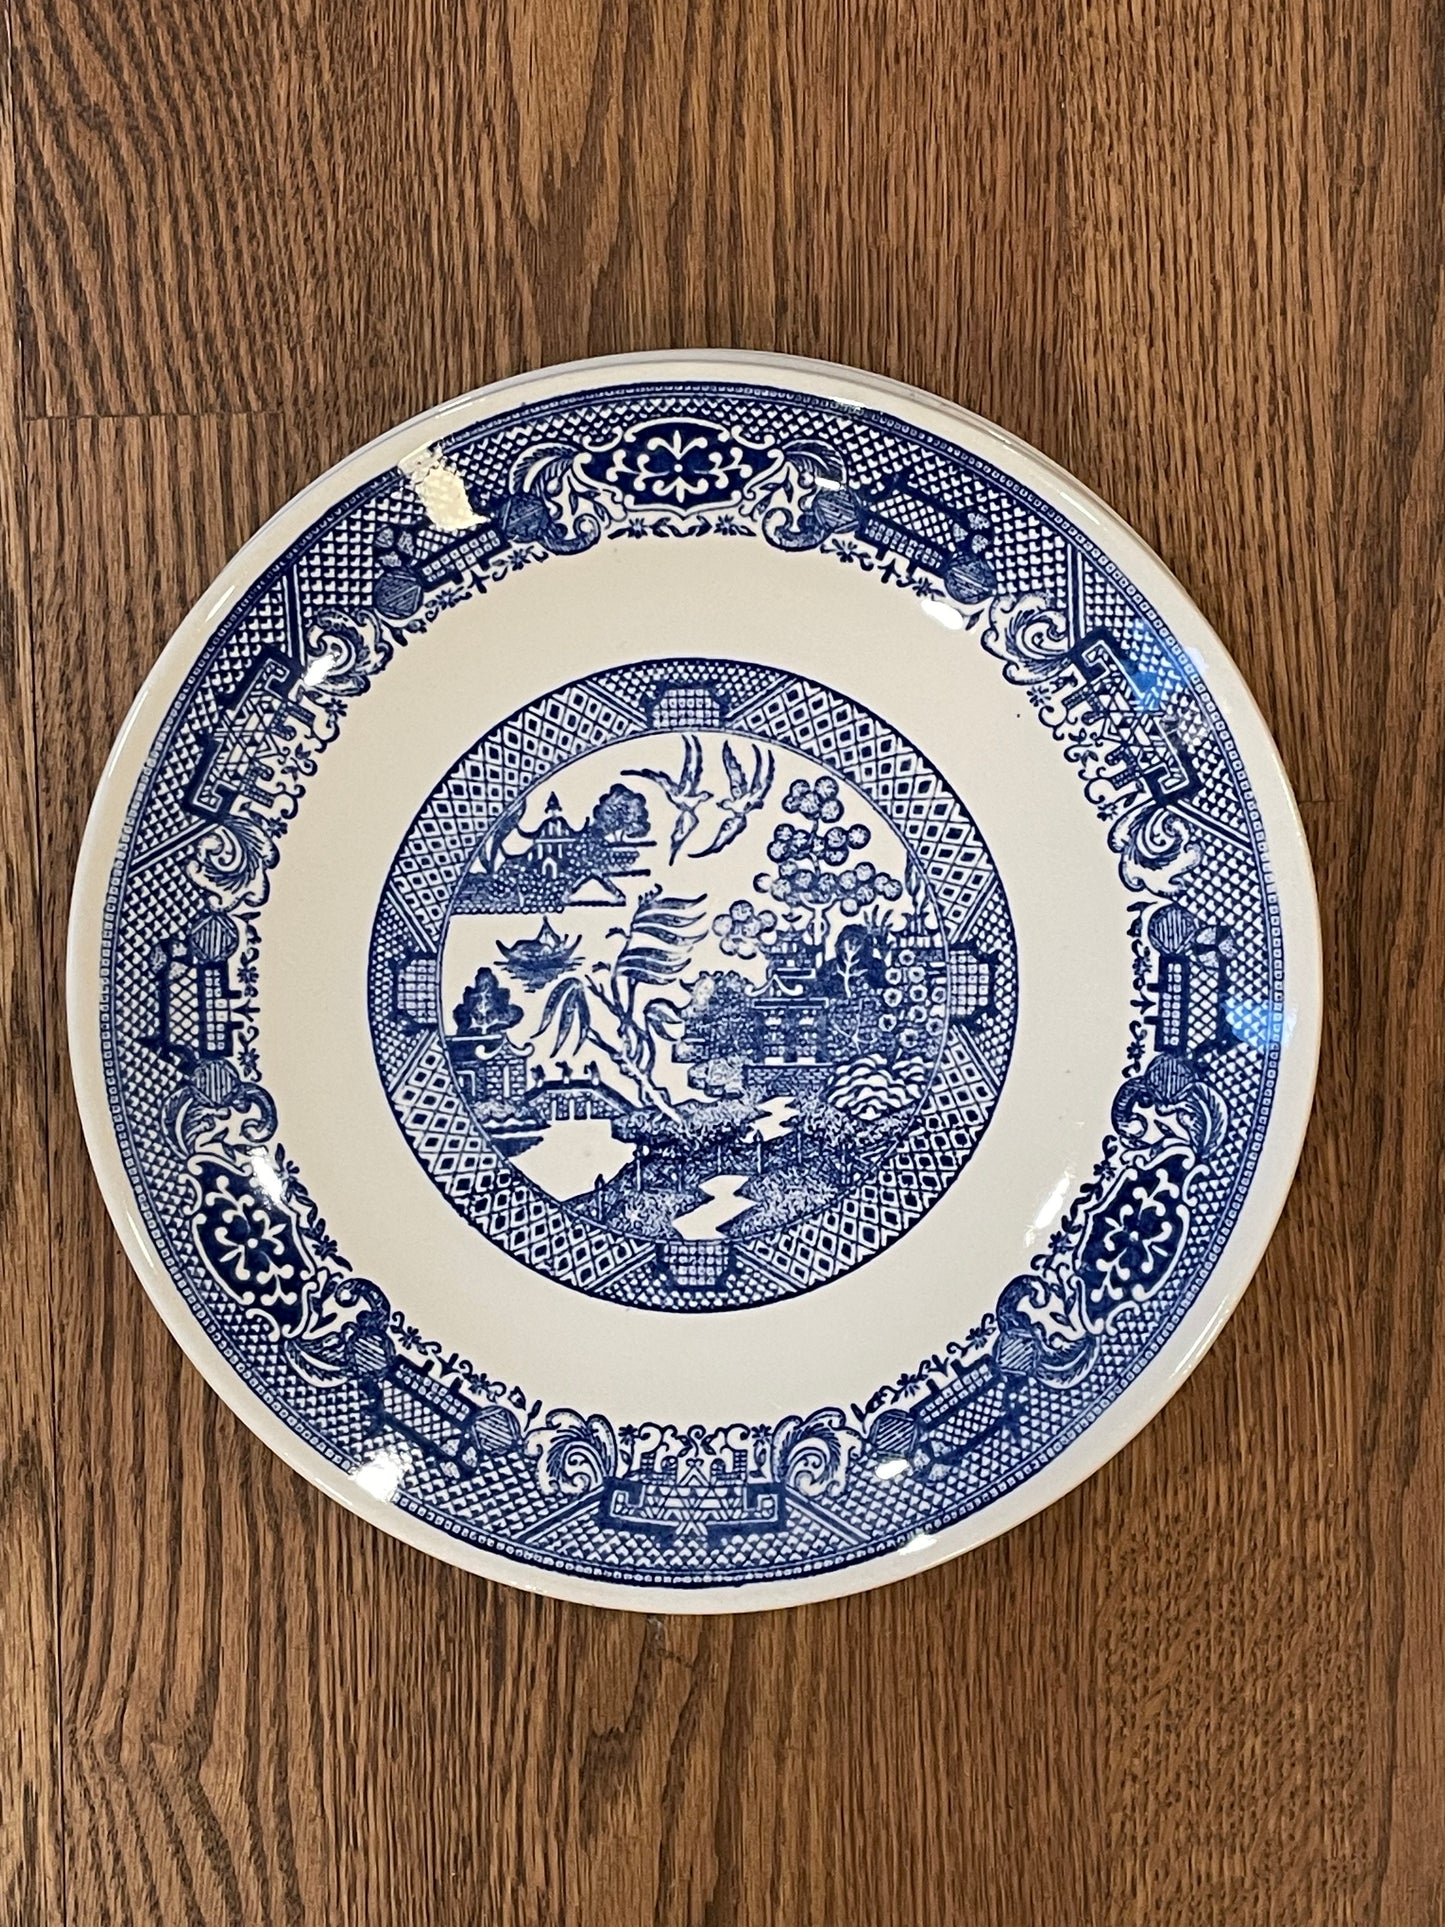 Blue Willow Pattern dinner plate